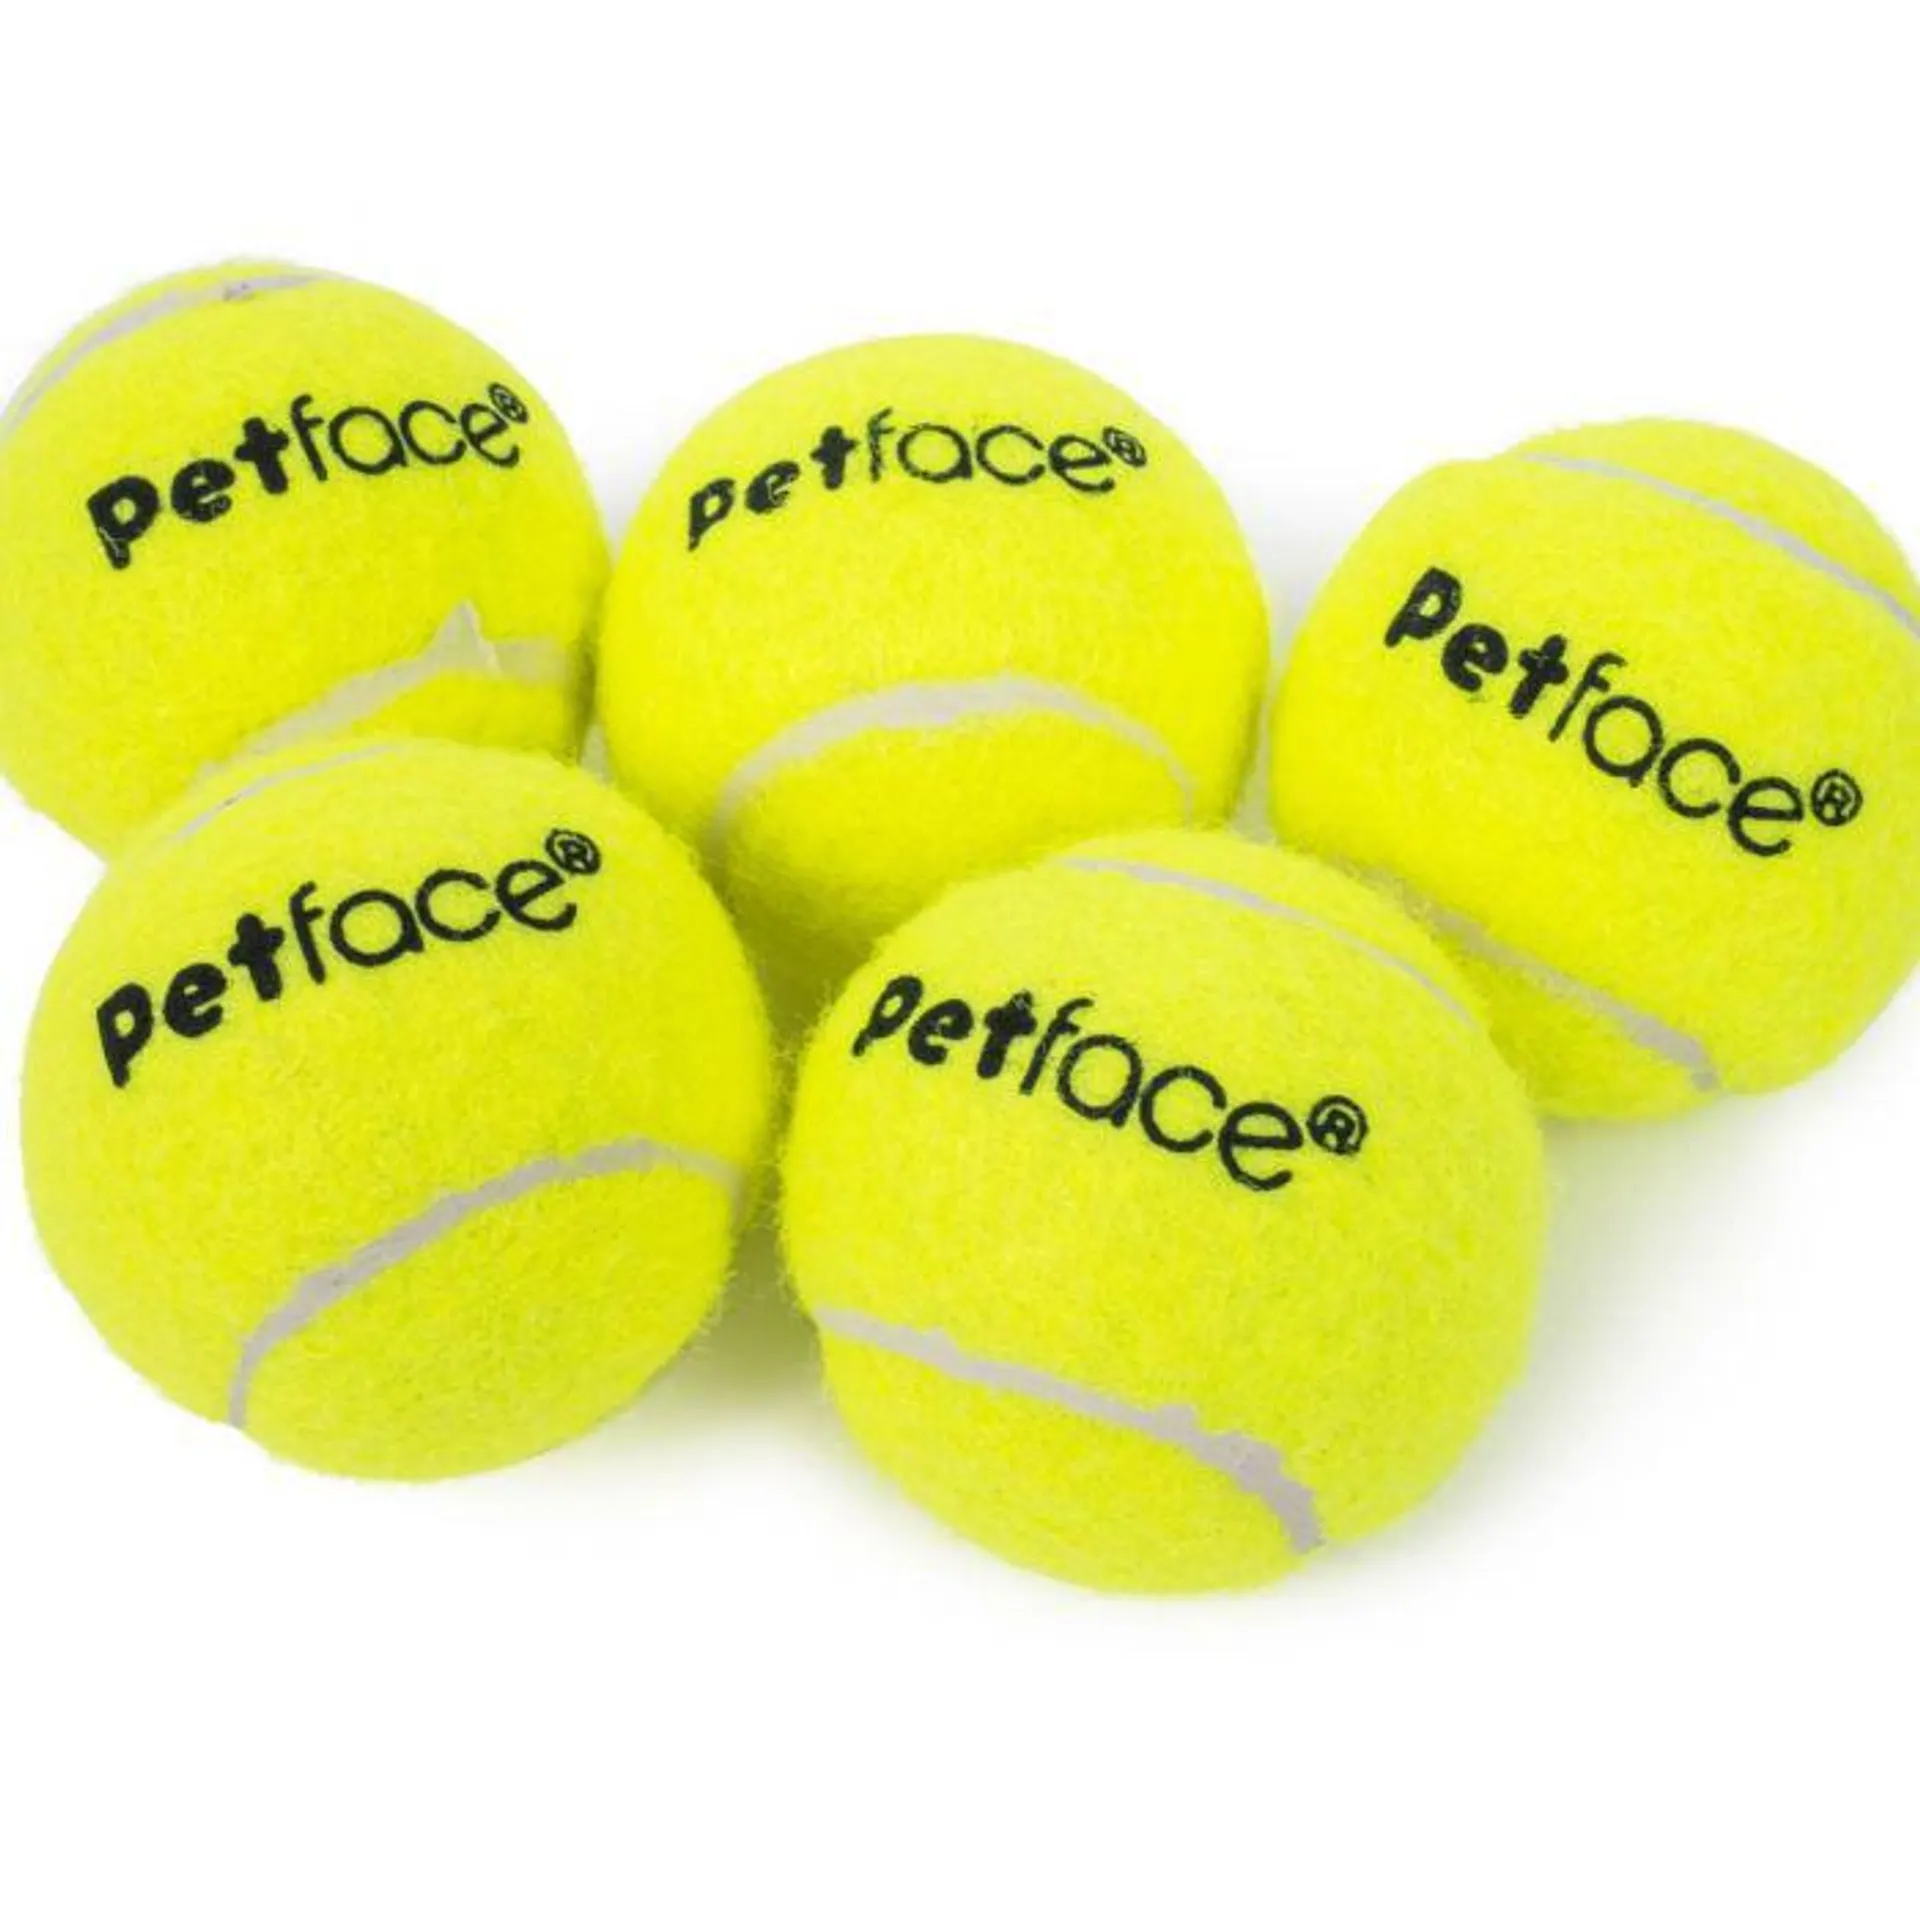 Petface 5 Pack of Mini Super Tennis Balls